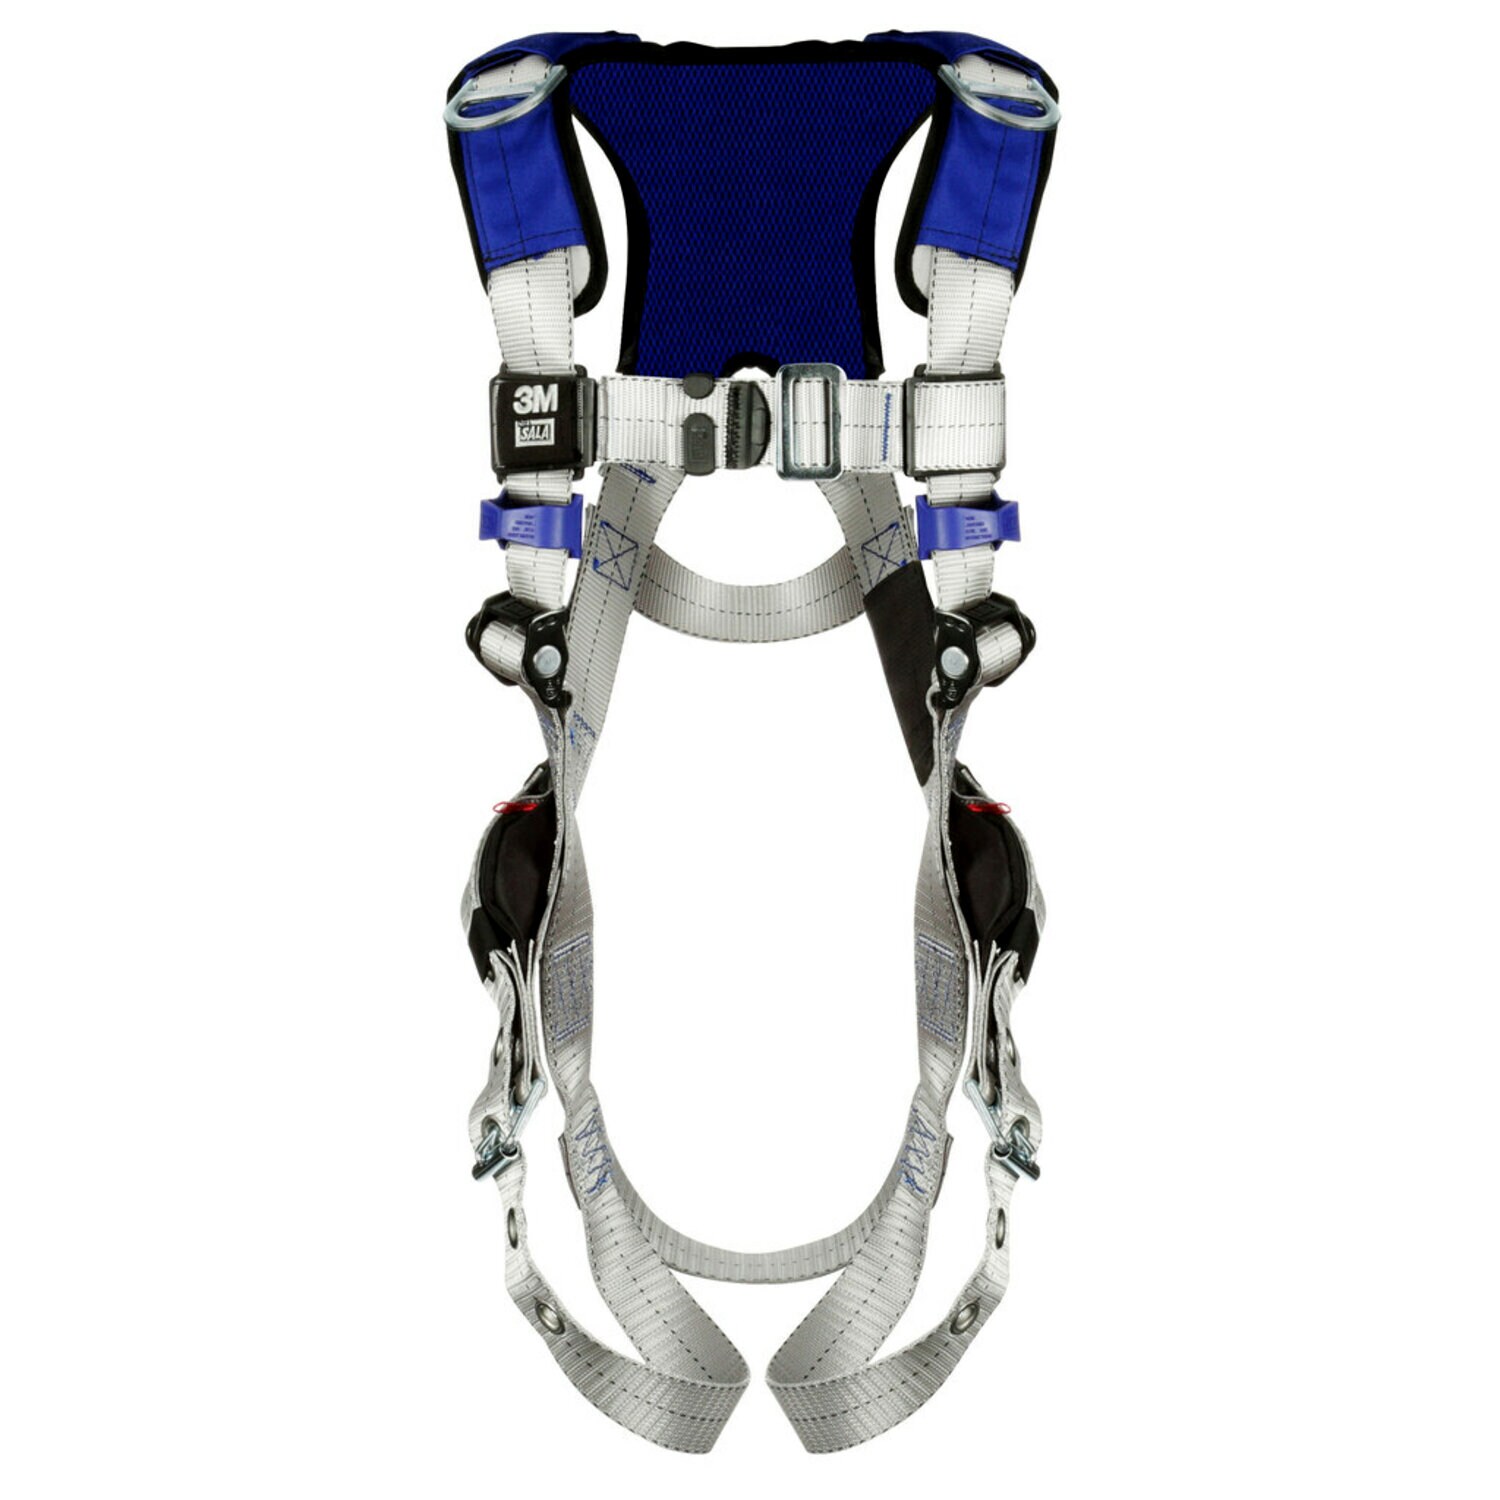 7012817641 - 3M DBI-SALA ExoFit X100 Comfort Vest Retrieval Safety Harness 1401158, Large